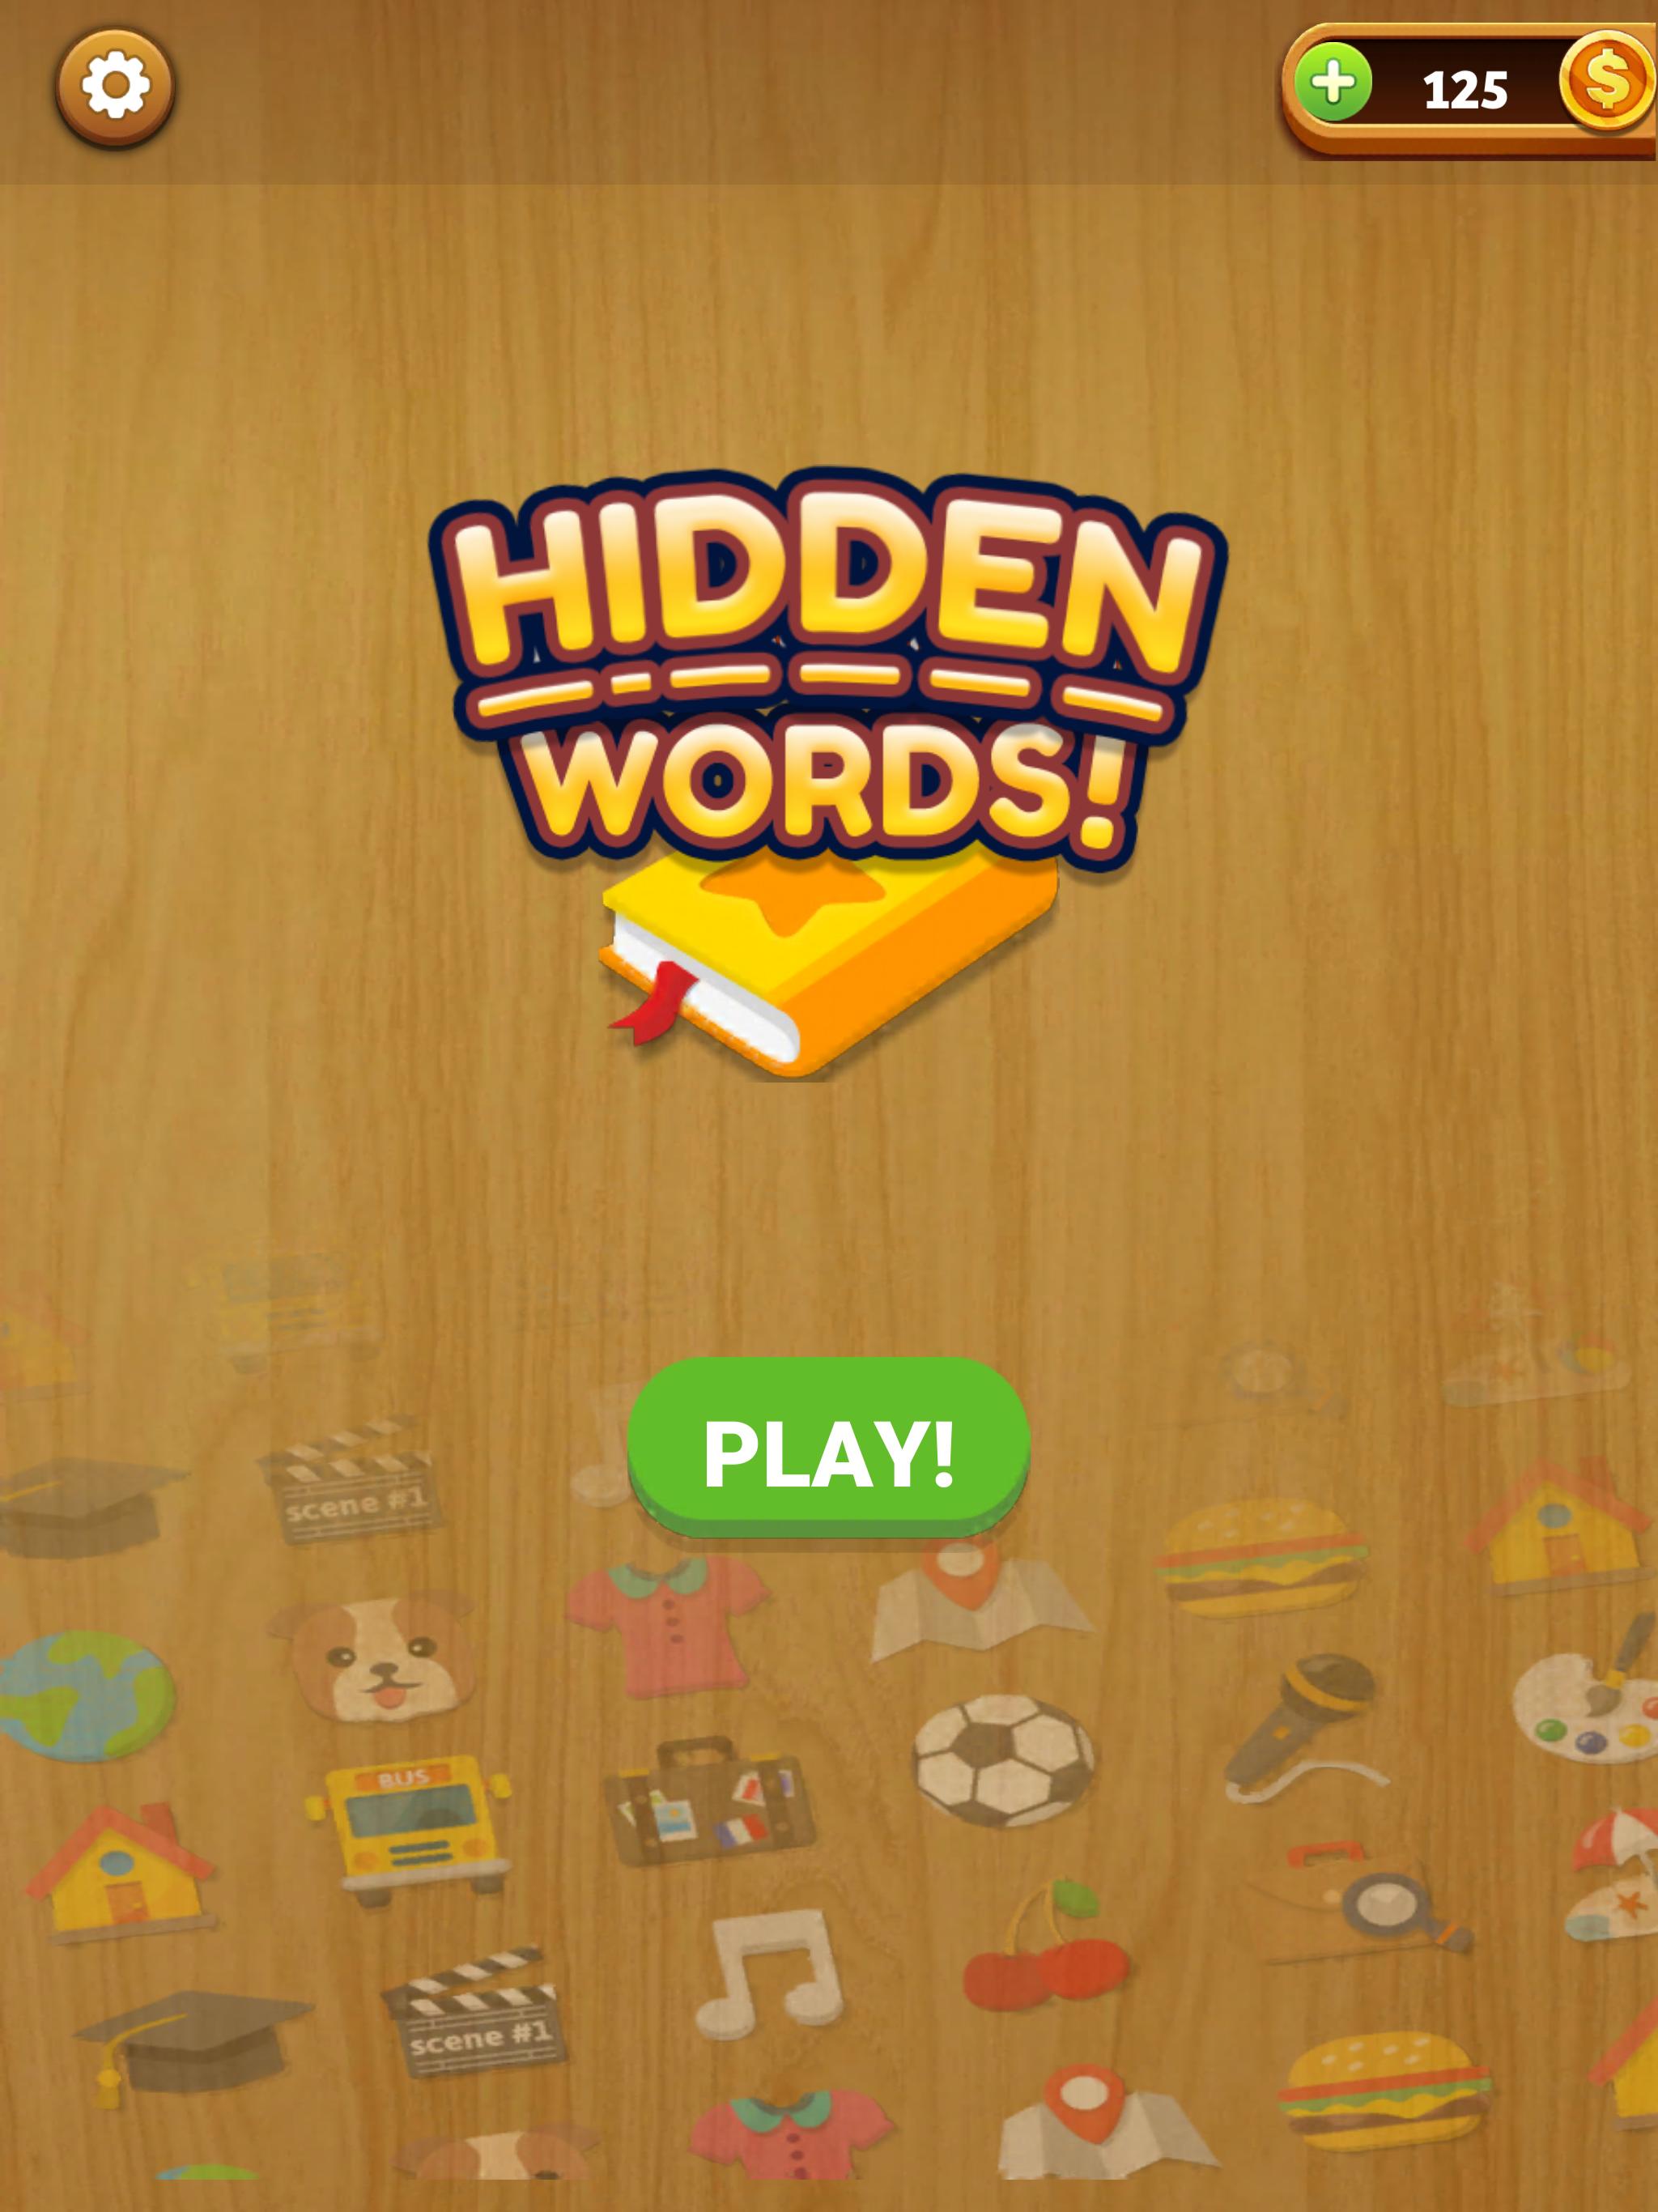 Hidden Words Word Search CrossWord Fun Game 1.0.1 Screenshot 19